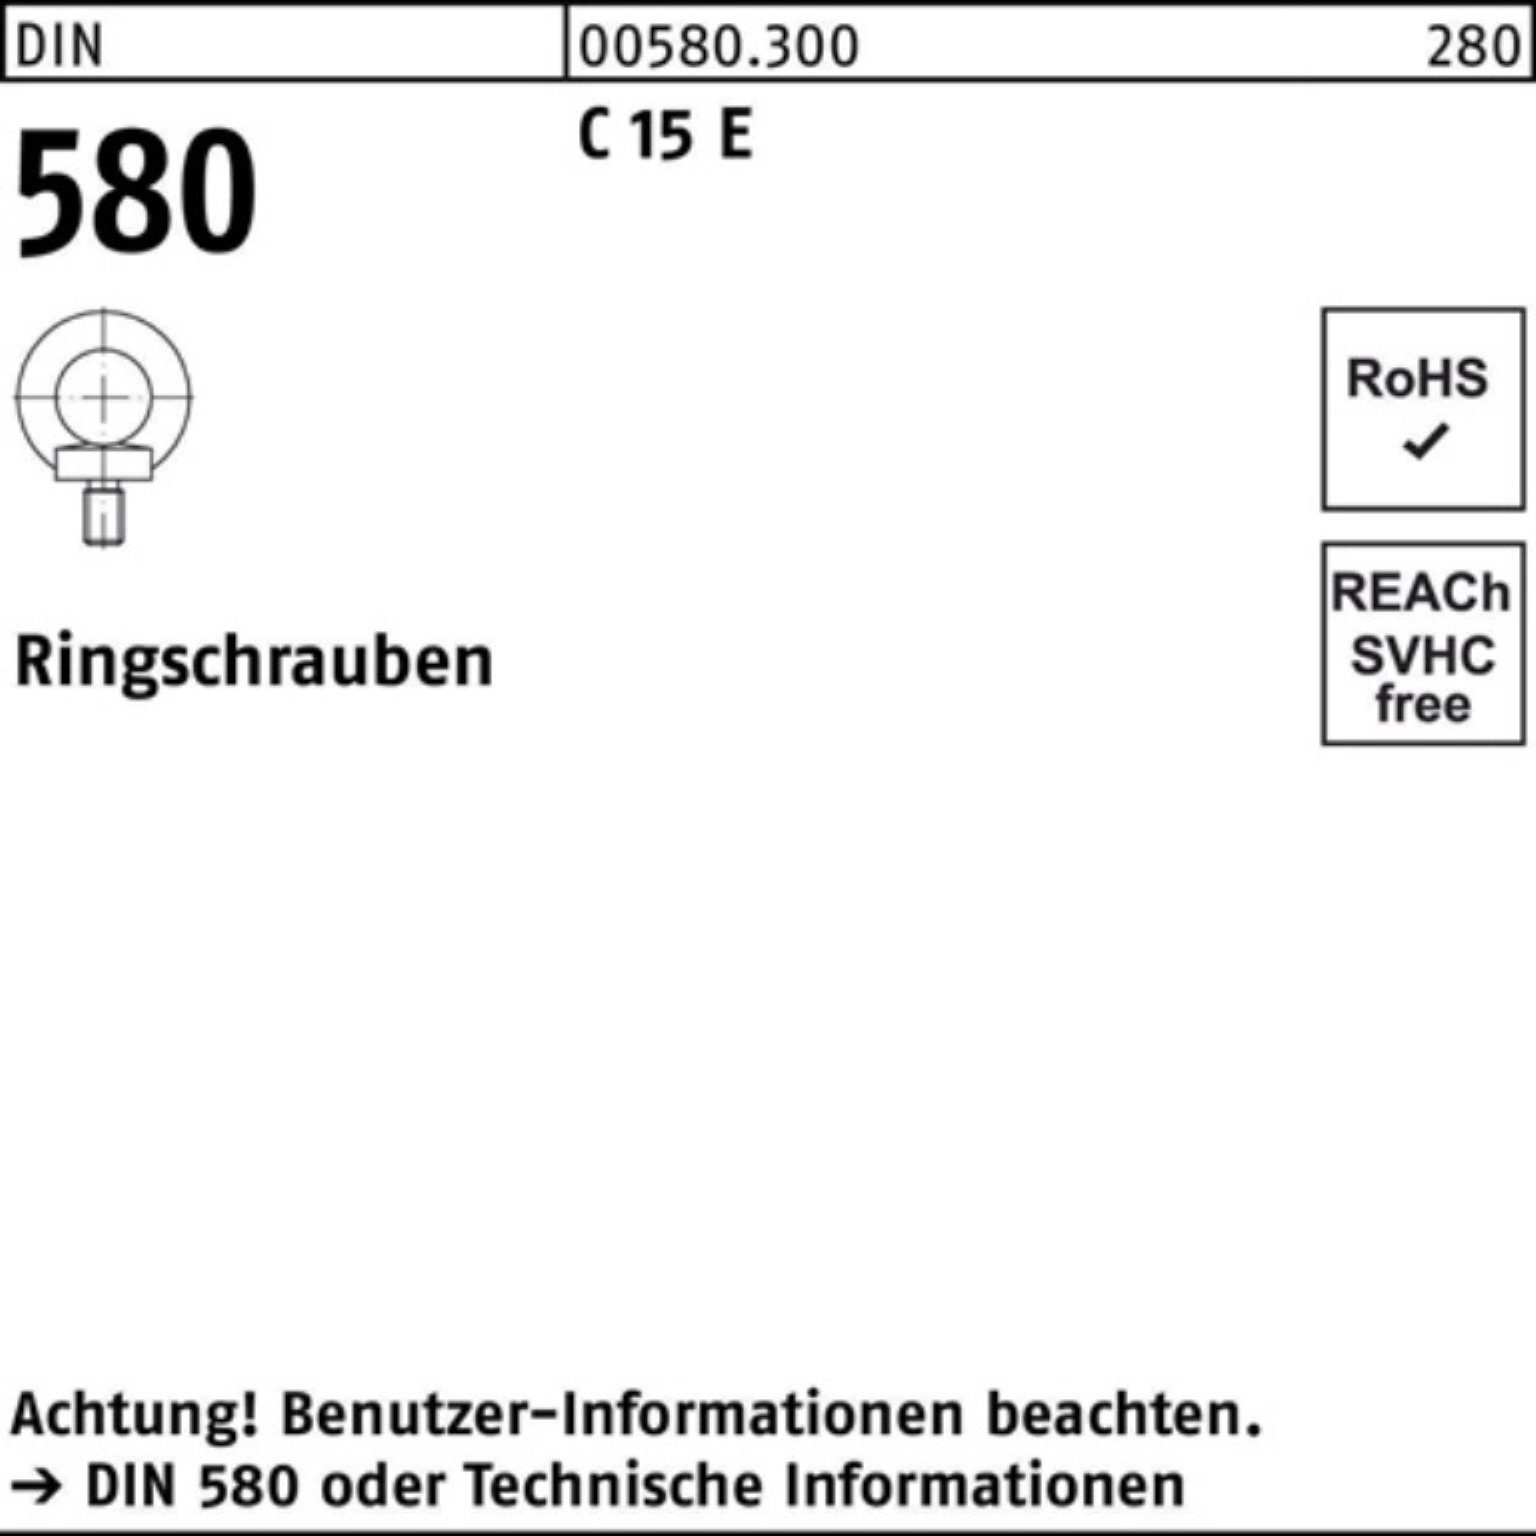 Reyher Schraube 100er Pack Ringschraube DIN 580 M64 C 15 E 1 Stück DIN 580 C 15 E Rin